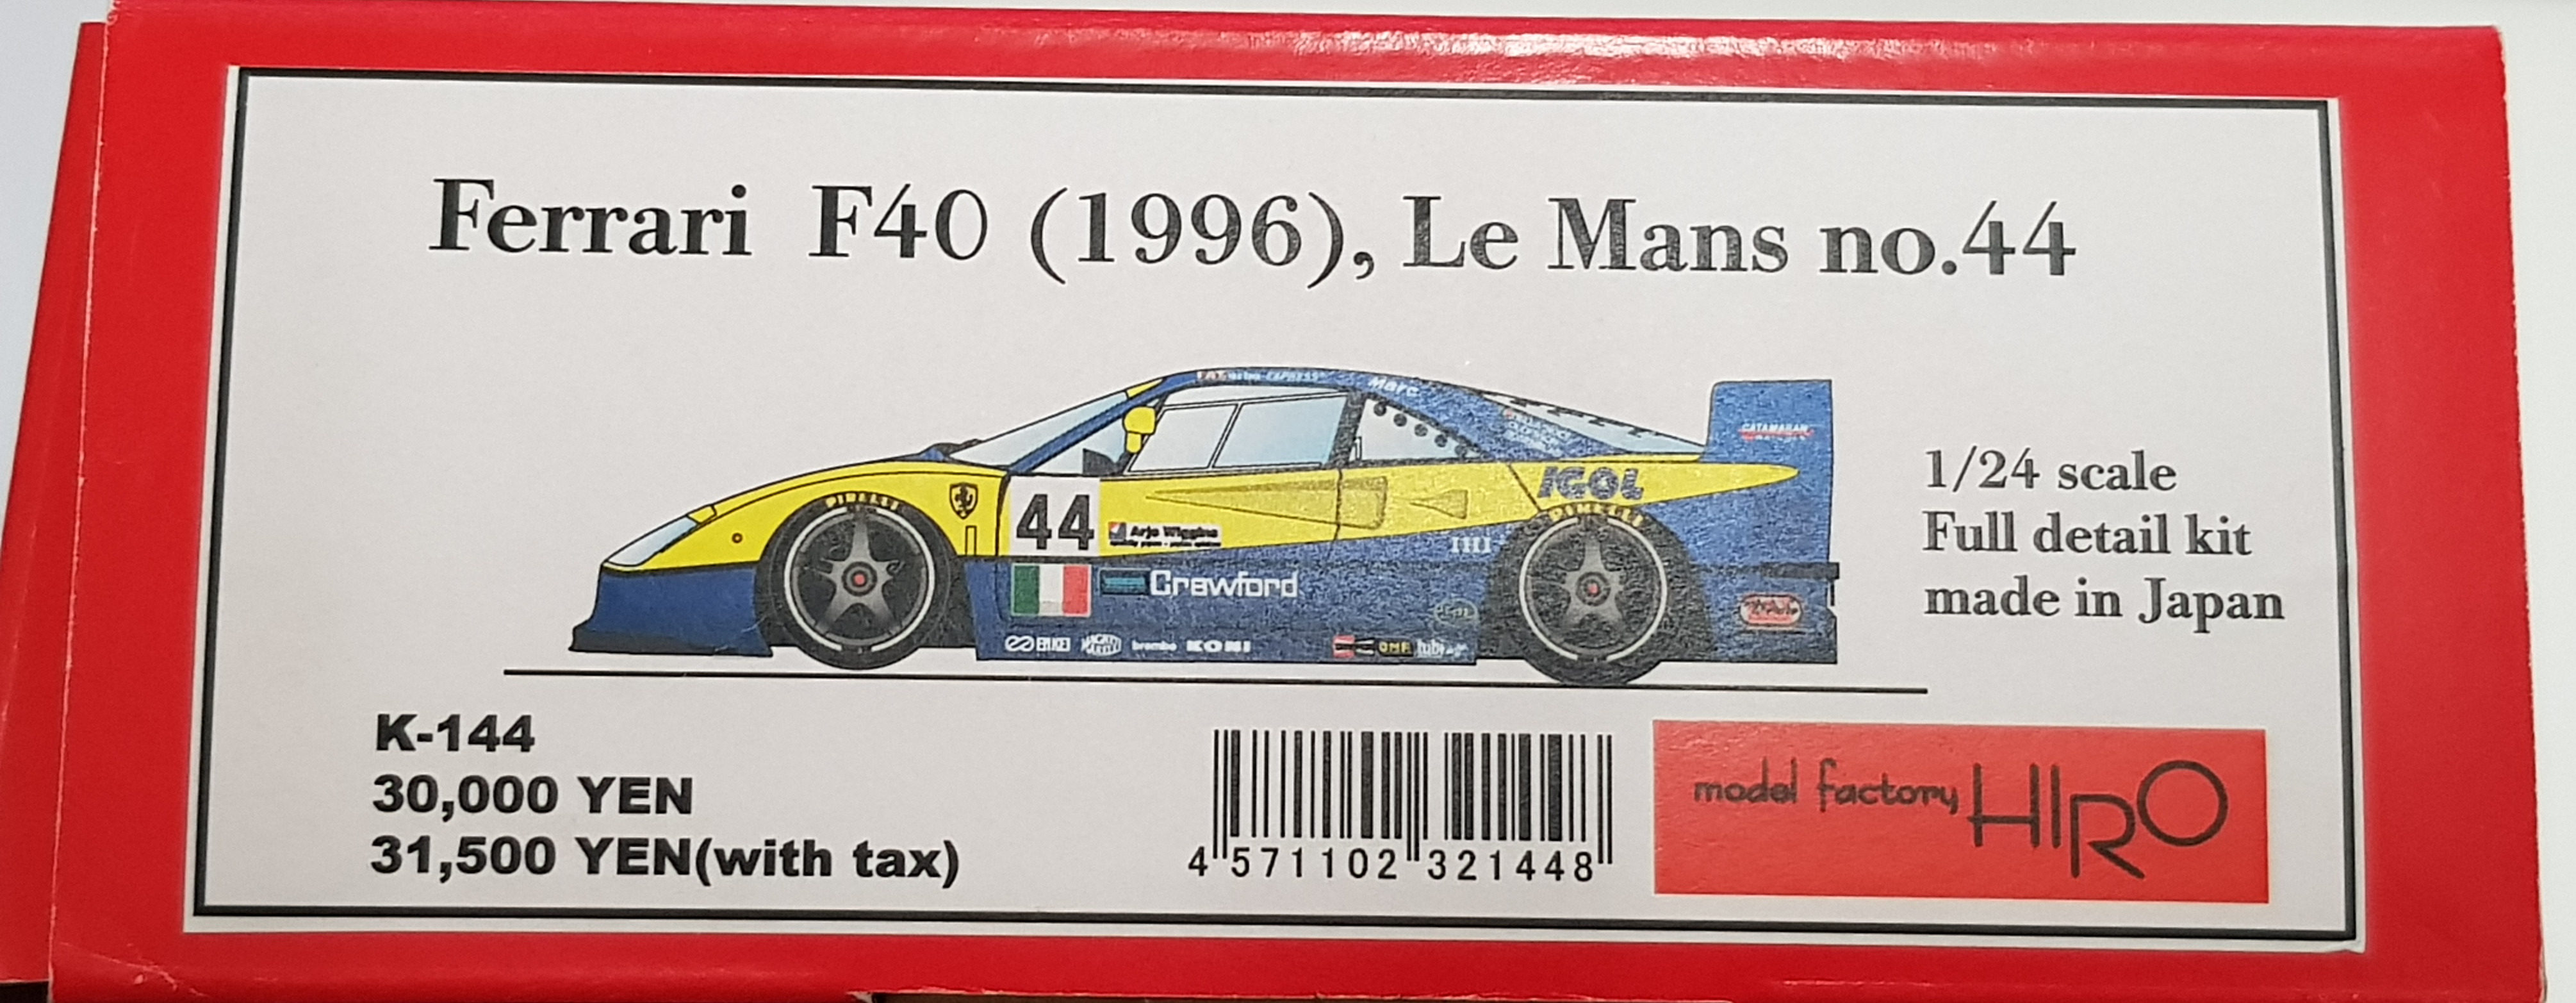 Ferrari F40 (1996) Le Mans #44